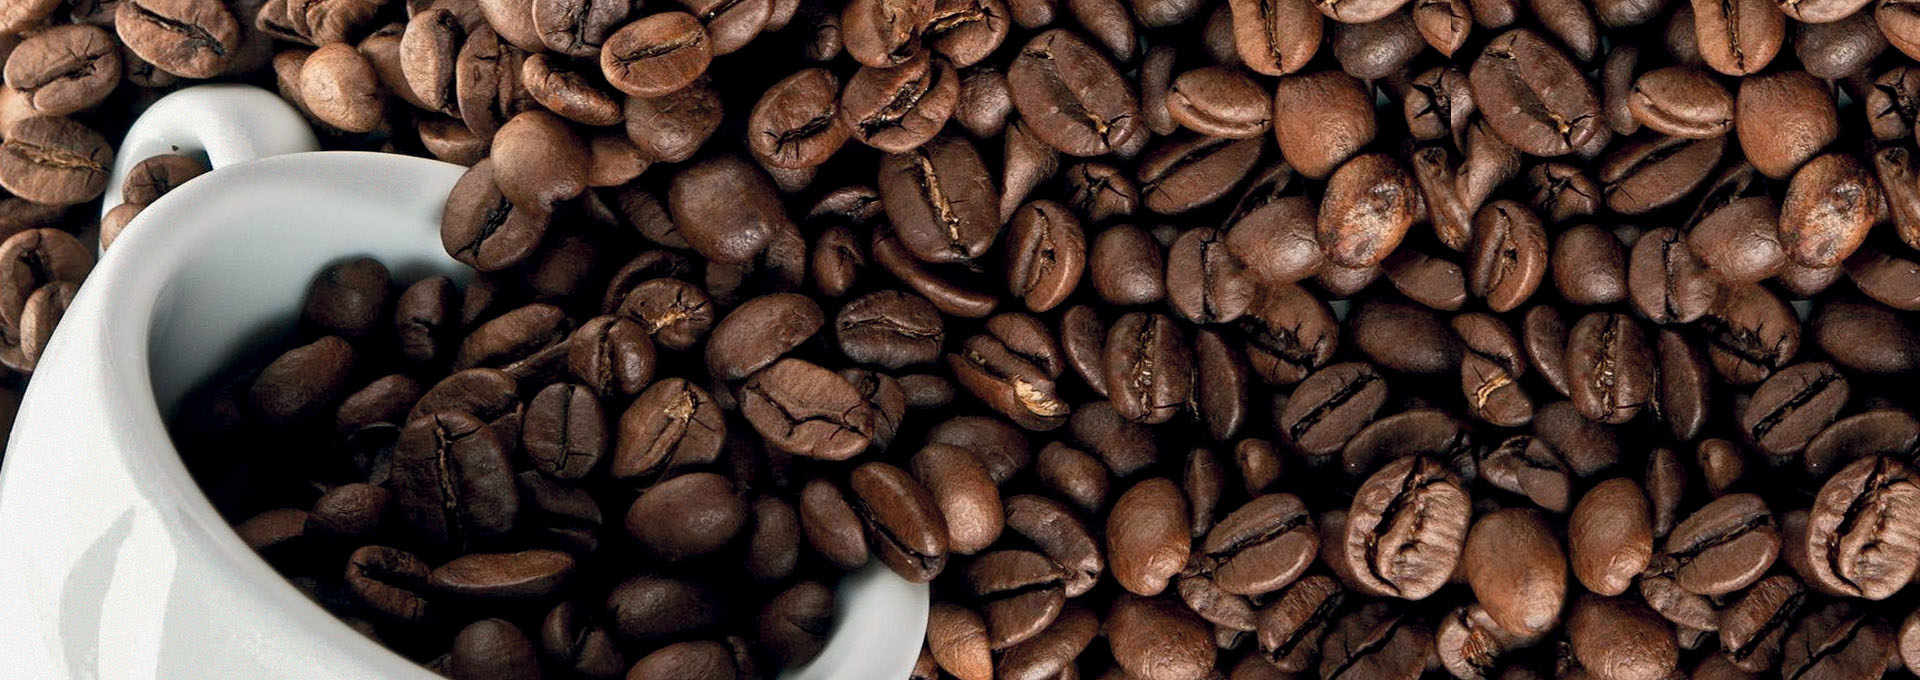 Coffee, An Irresistible Dark Potion